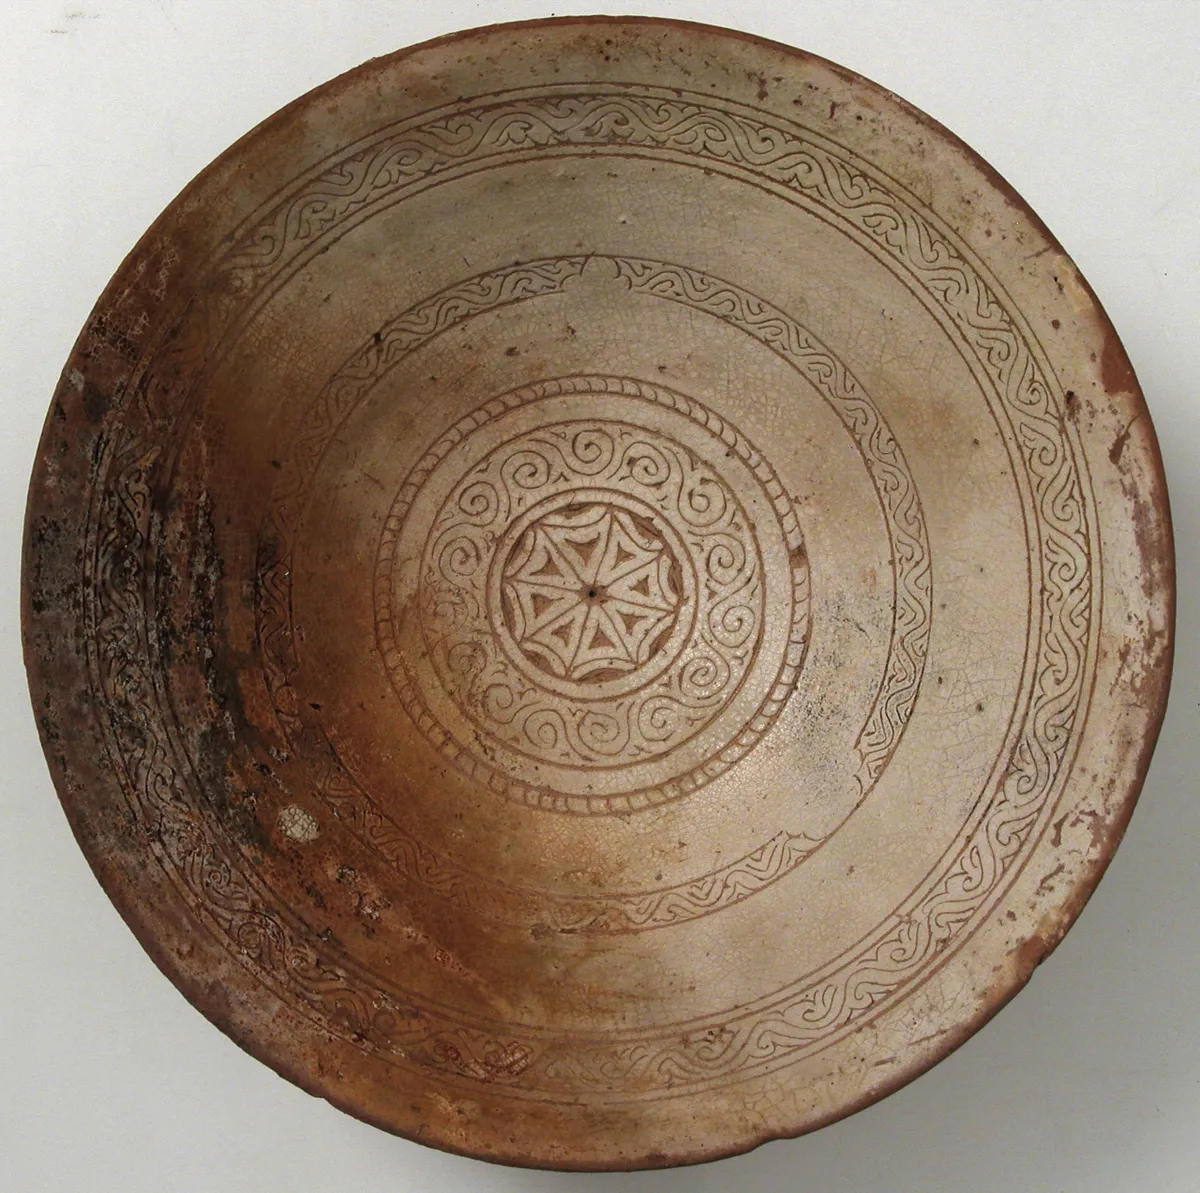 Antique clay bowl